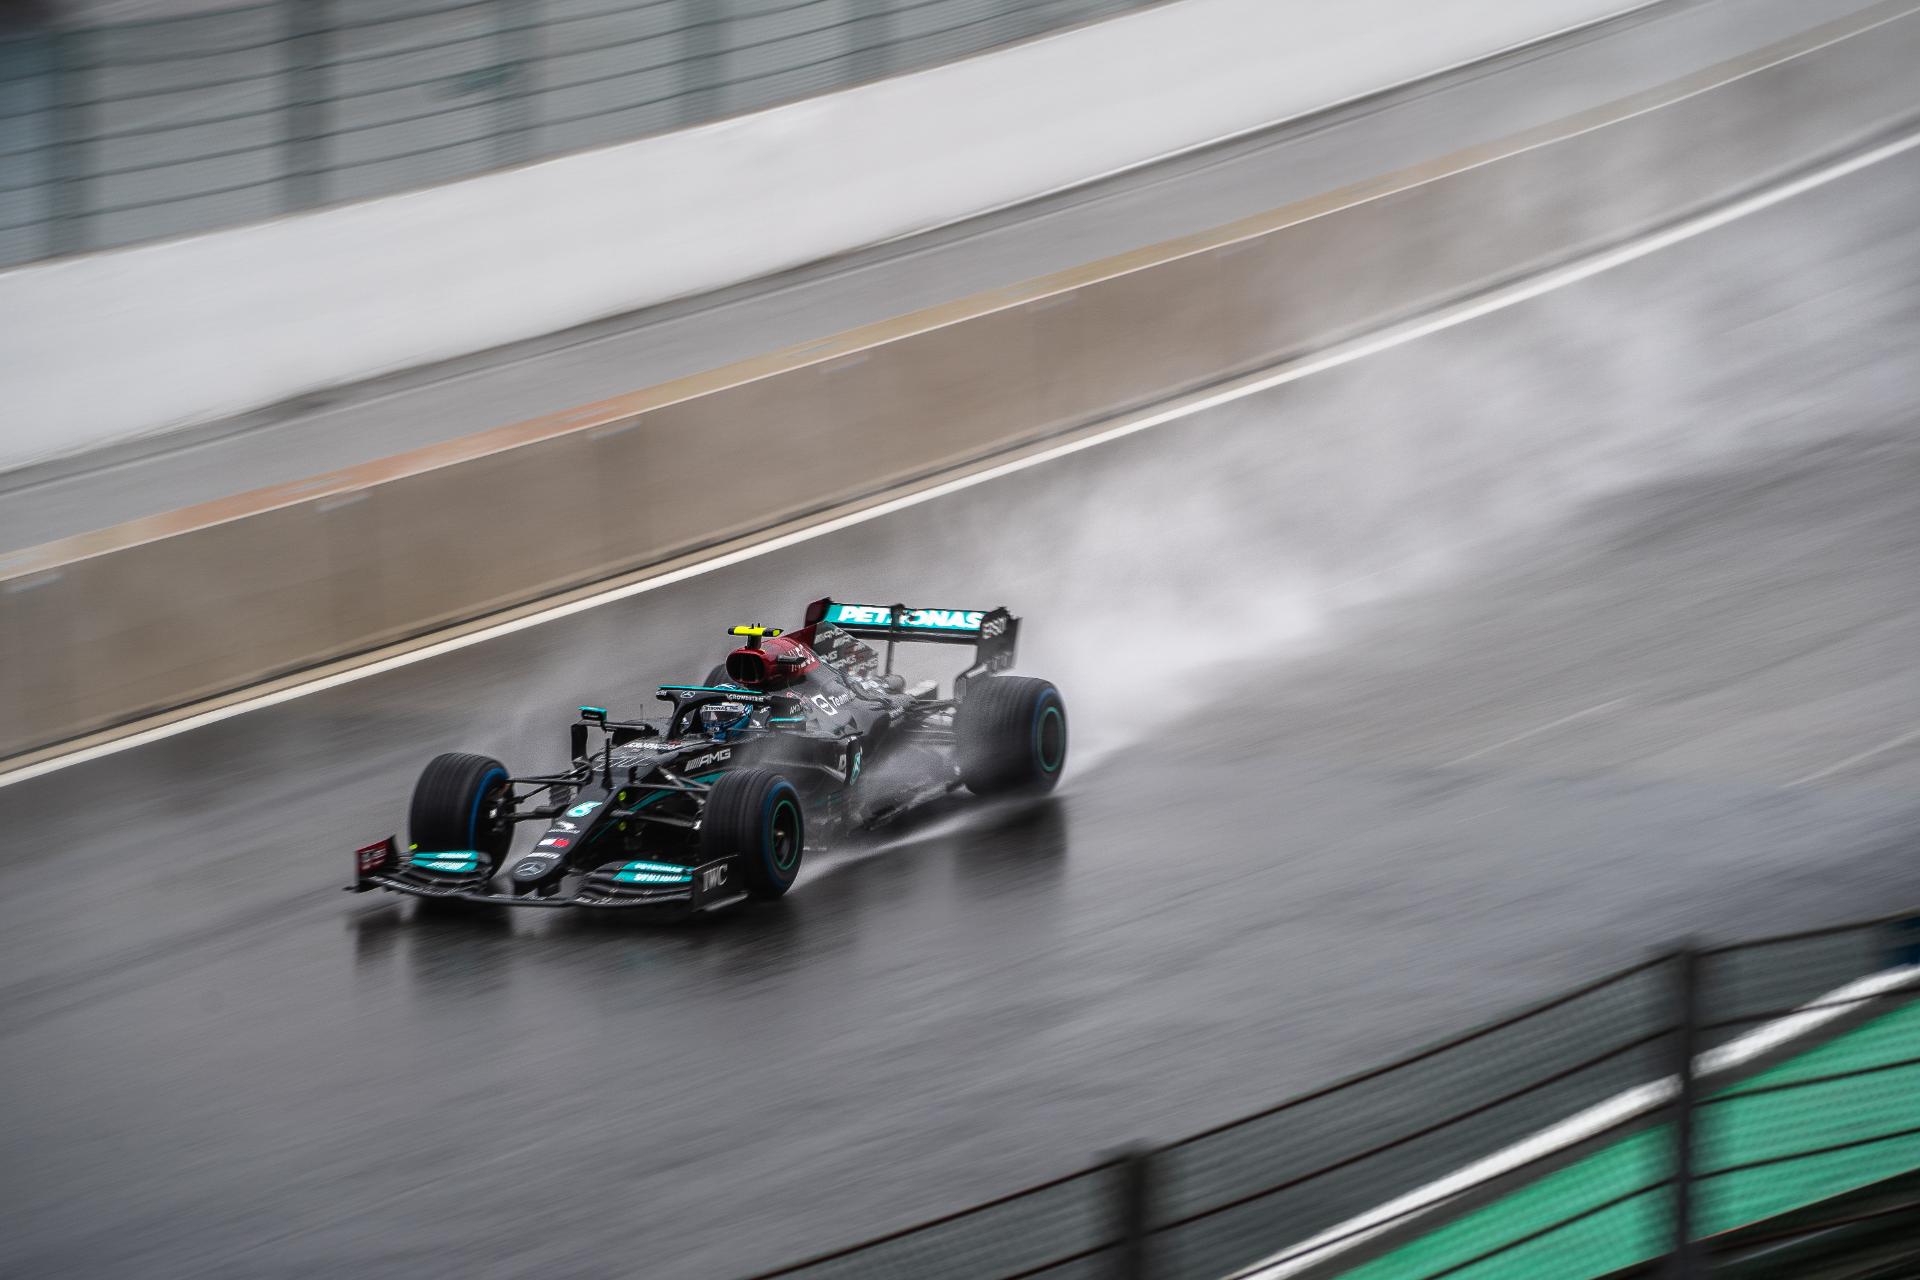 Formel 1 Fahrt im Regen verdrängtes Wasser